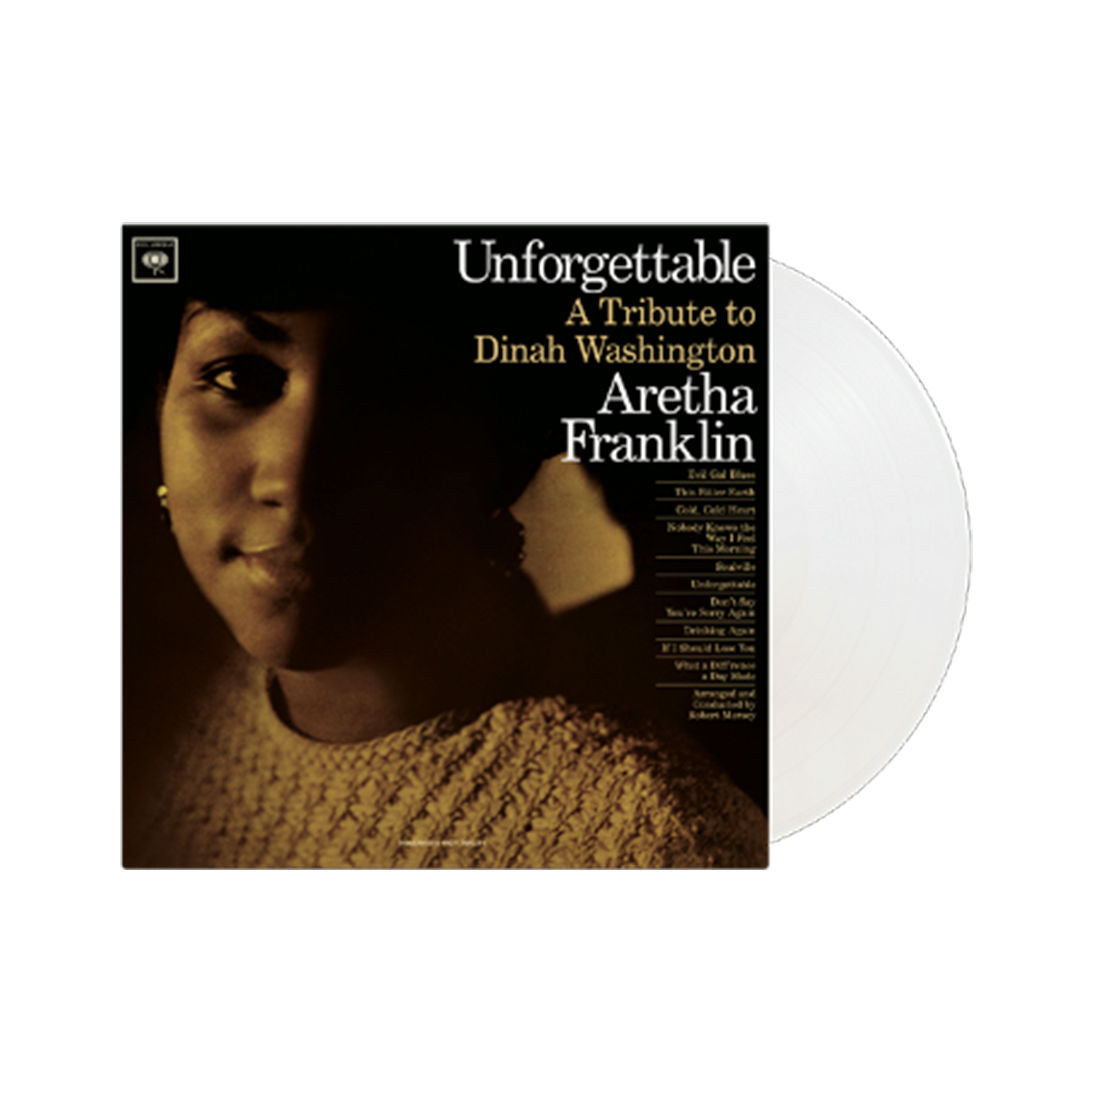 Aretha Franklin - Unforgettable: A Tribute to Dinah Washington LP